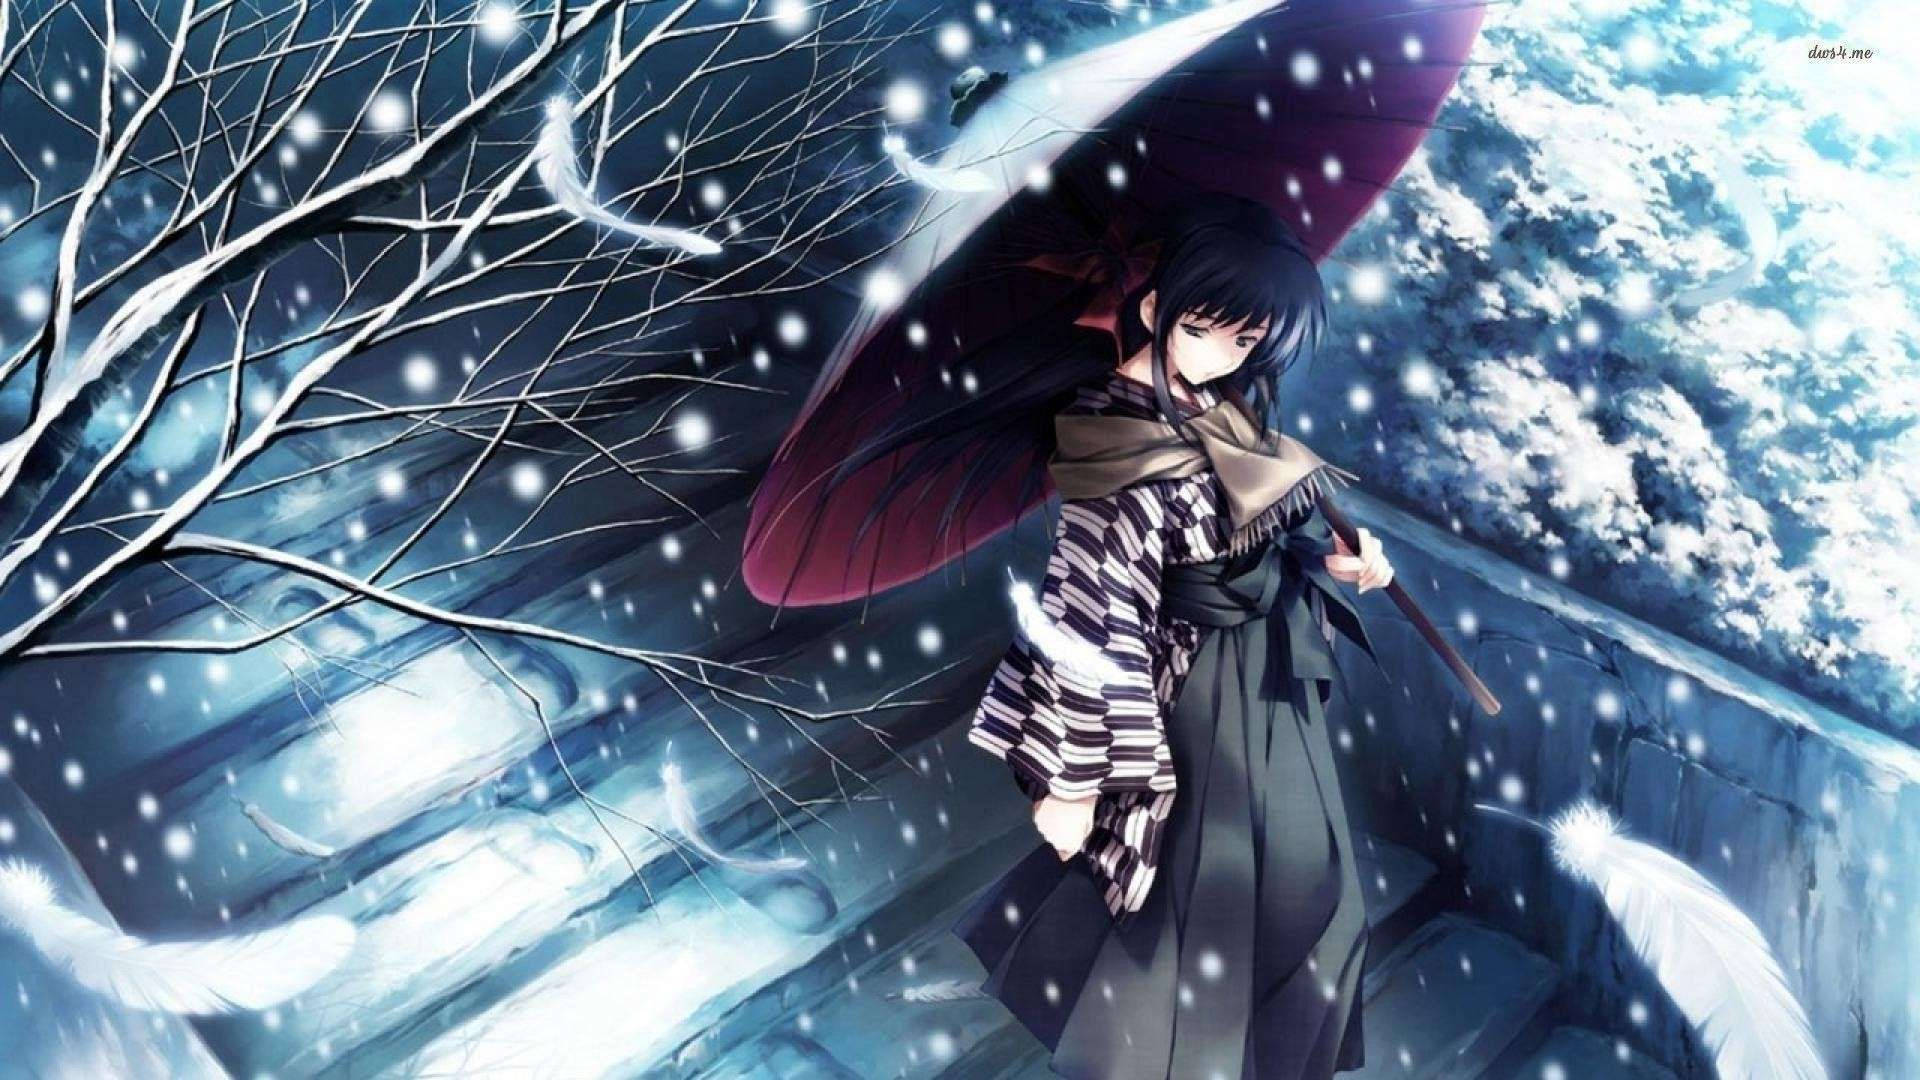 Sad Anime Girl During Snow Wallpaper